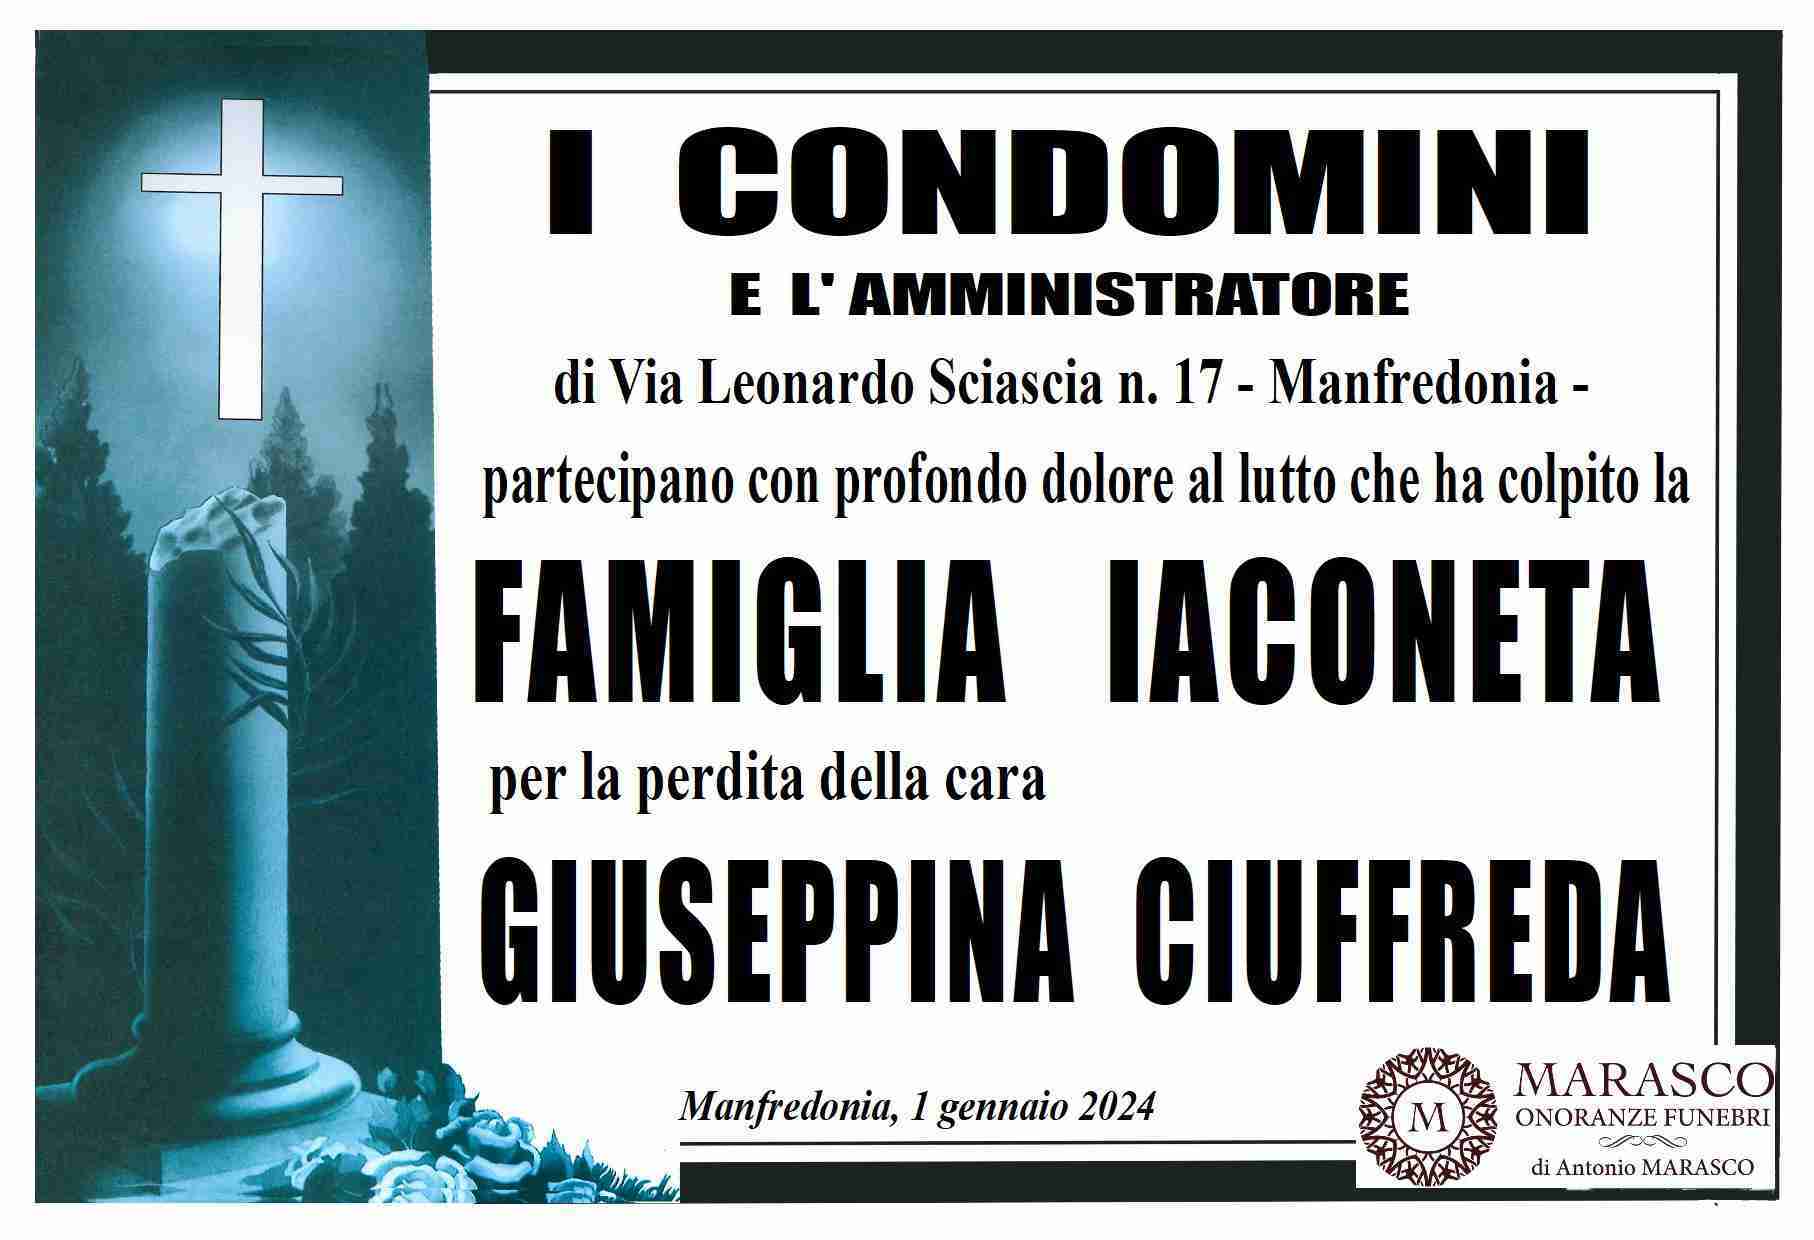 Giuseppina Ciuffreda ved. Iaconeta